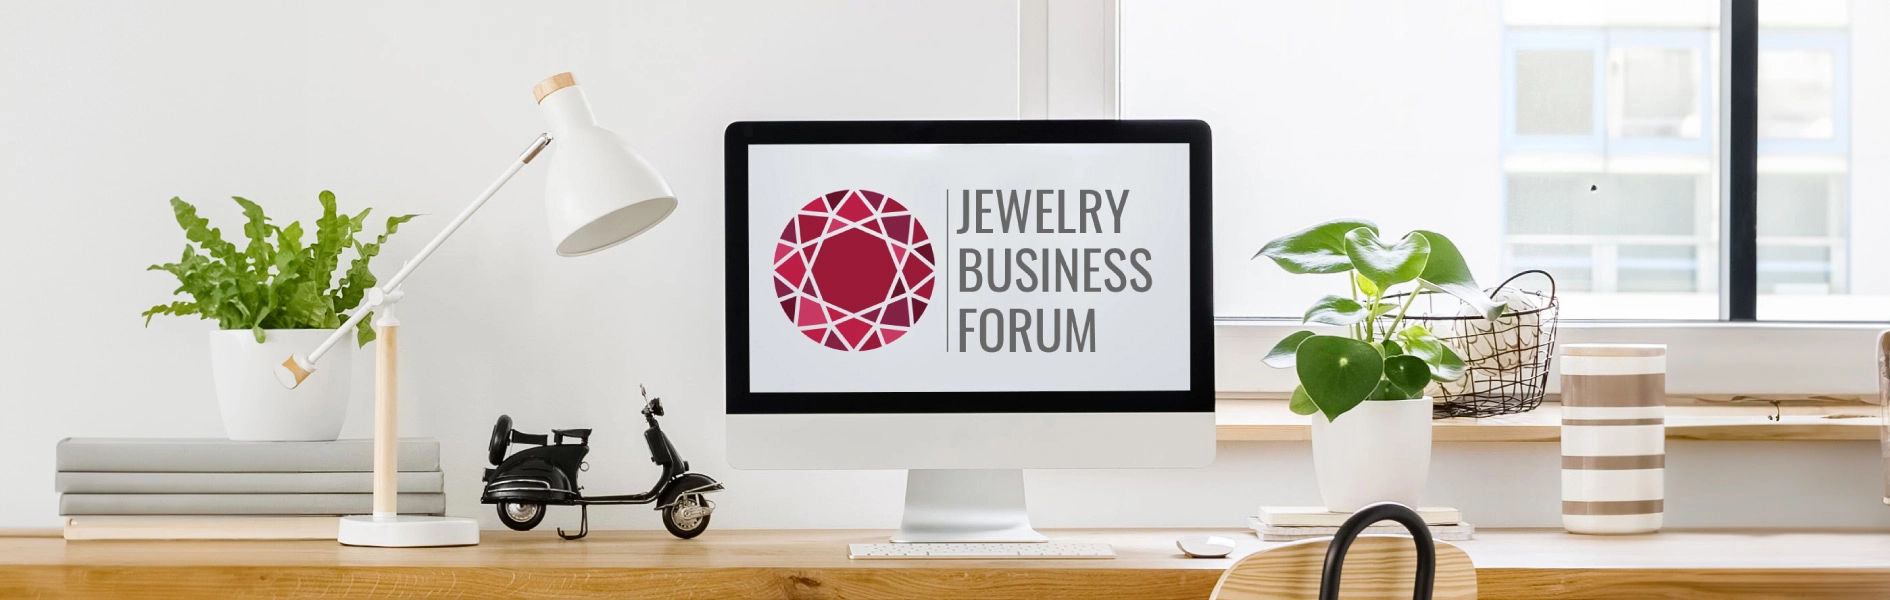 Jewelry Business Forum logo on laptop